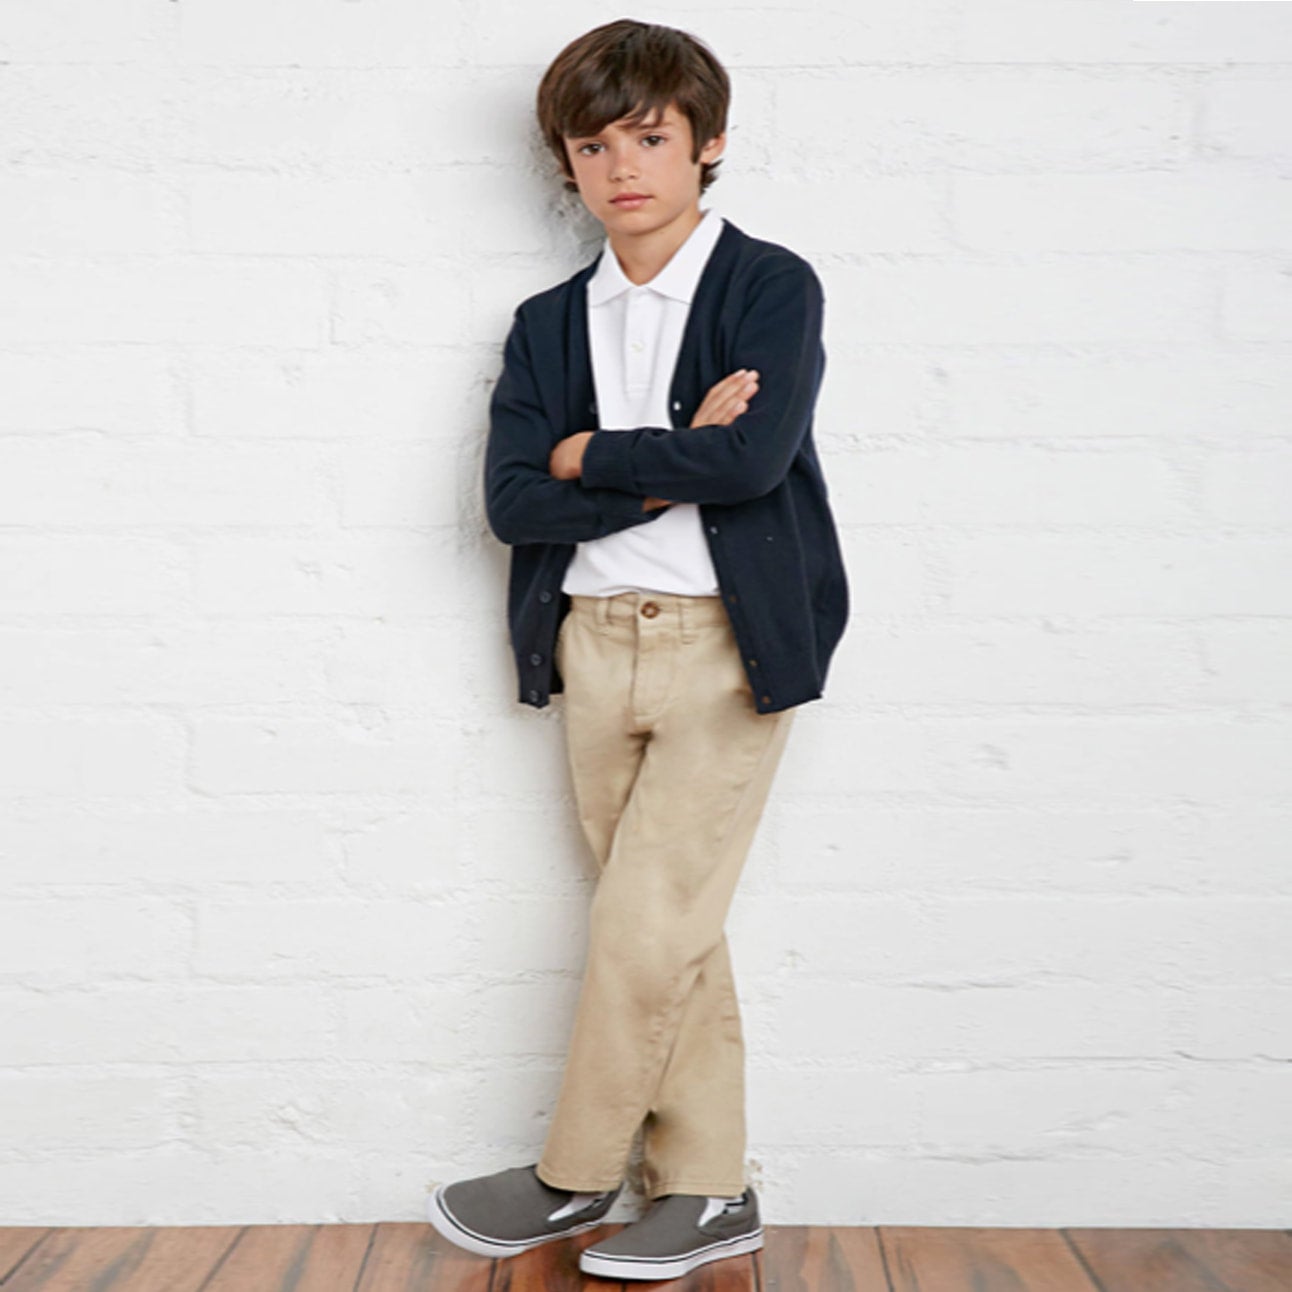 Slim Built-In Flex Chino School Uniform Pants 2-Pack for Boys | Old Navy